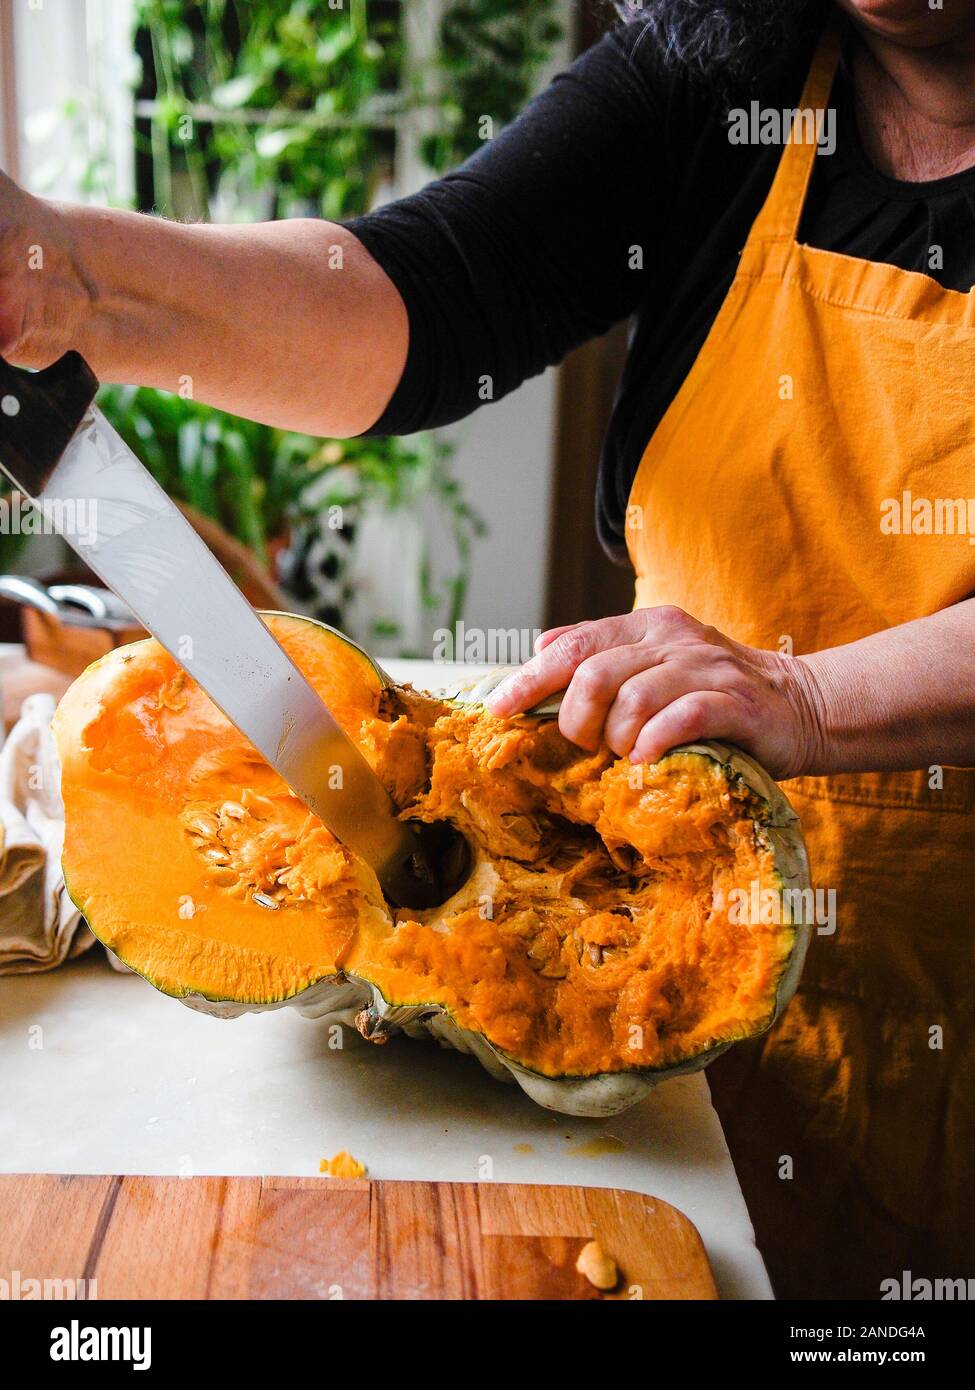 Preparing and cutting a fresh bio pumpkin Stock Photo